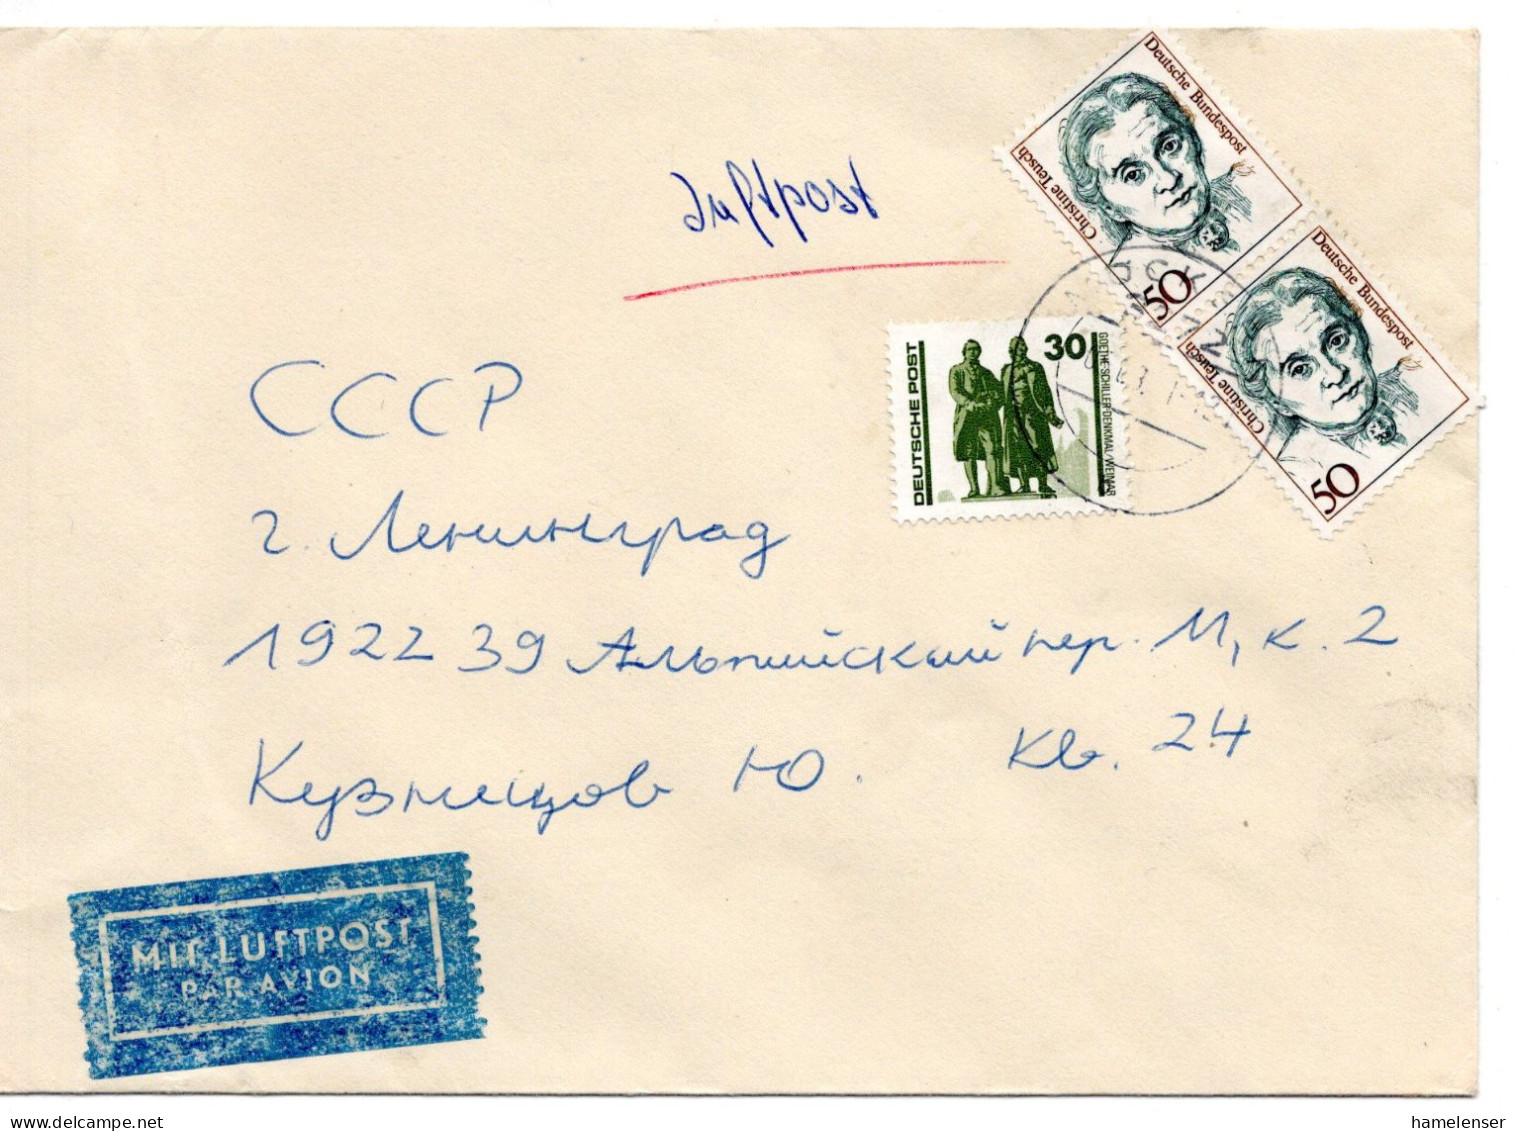 66866 - DDR - 1991 - 30Pfg DM-Serie MiF A LpBf MOECKERN -> LENINGRAD (UdSSR) - Briefe U. Dokumente